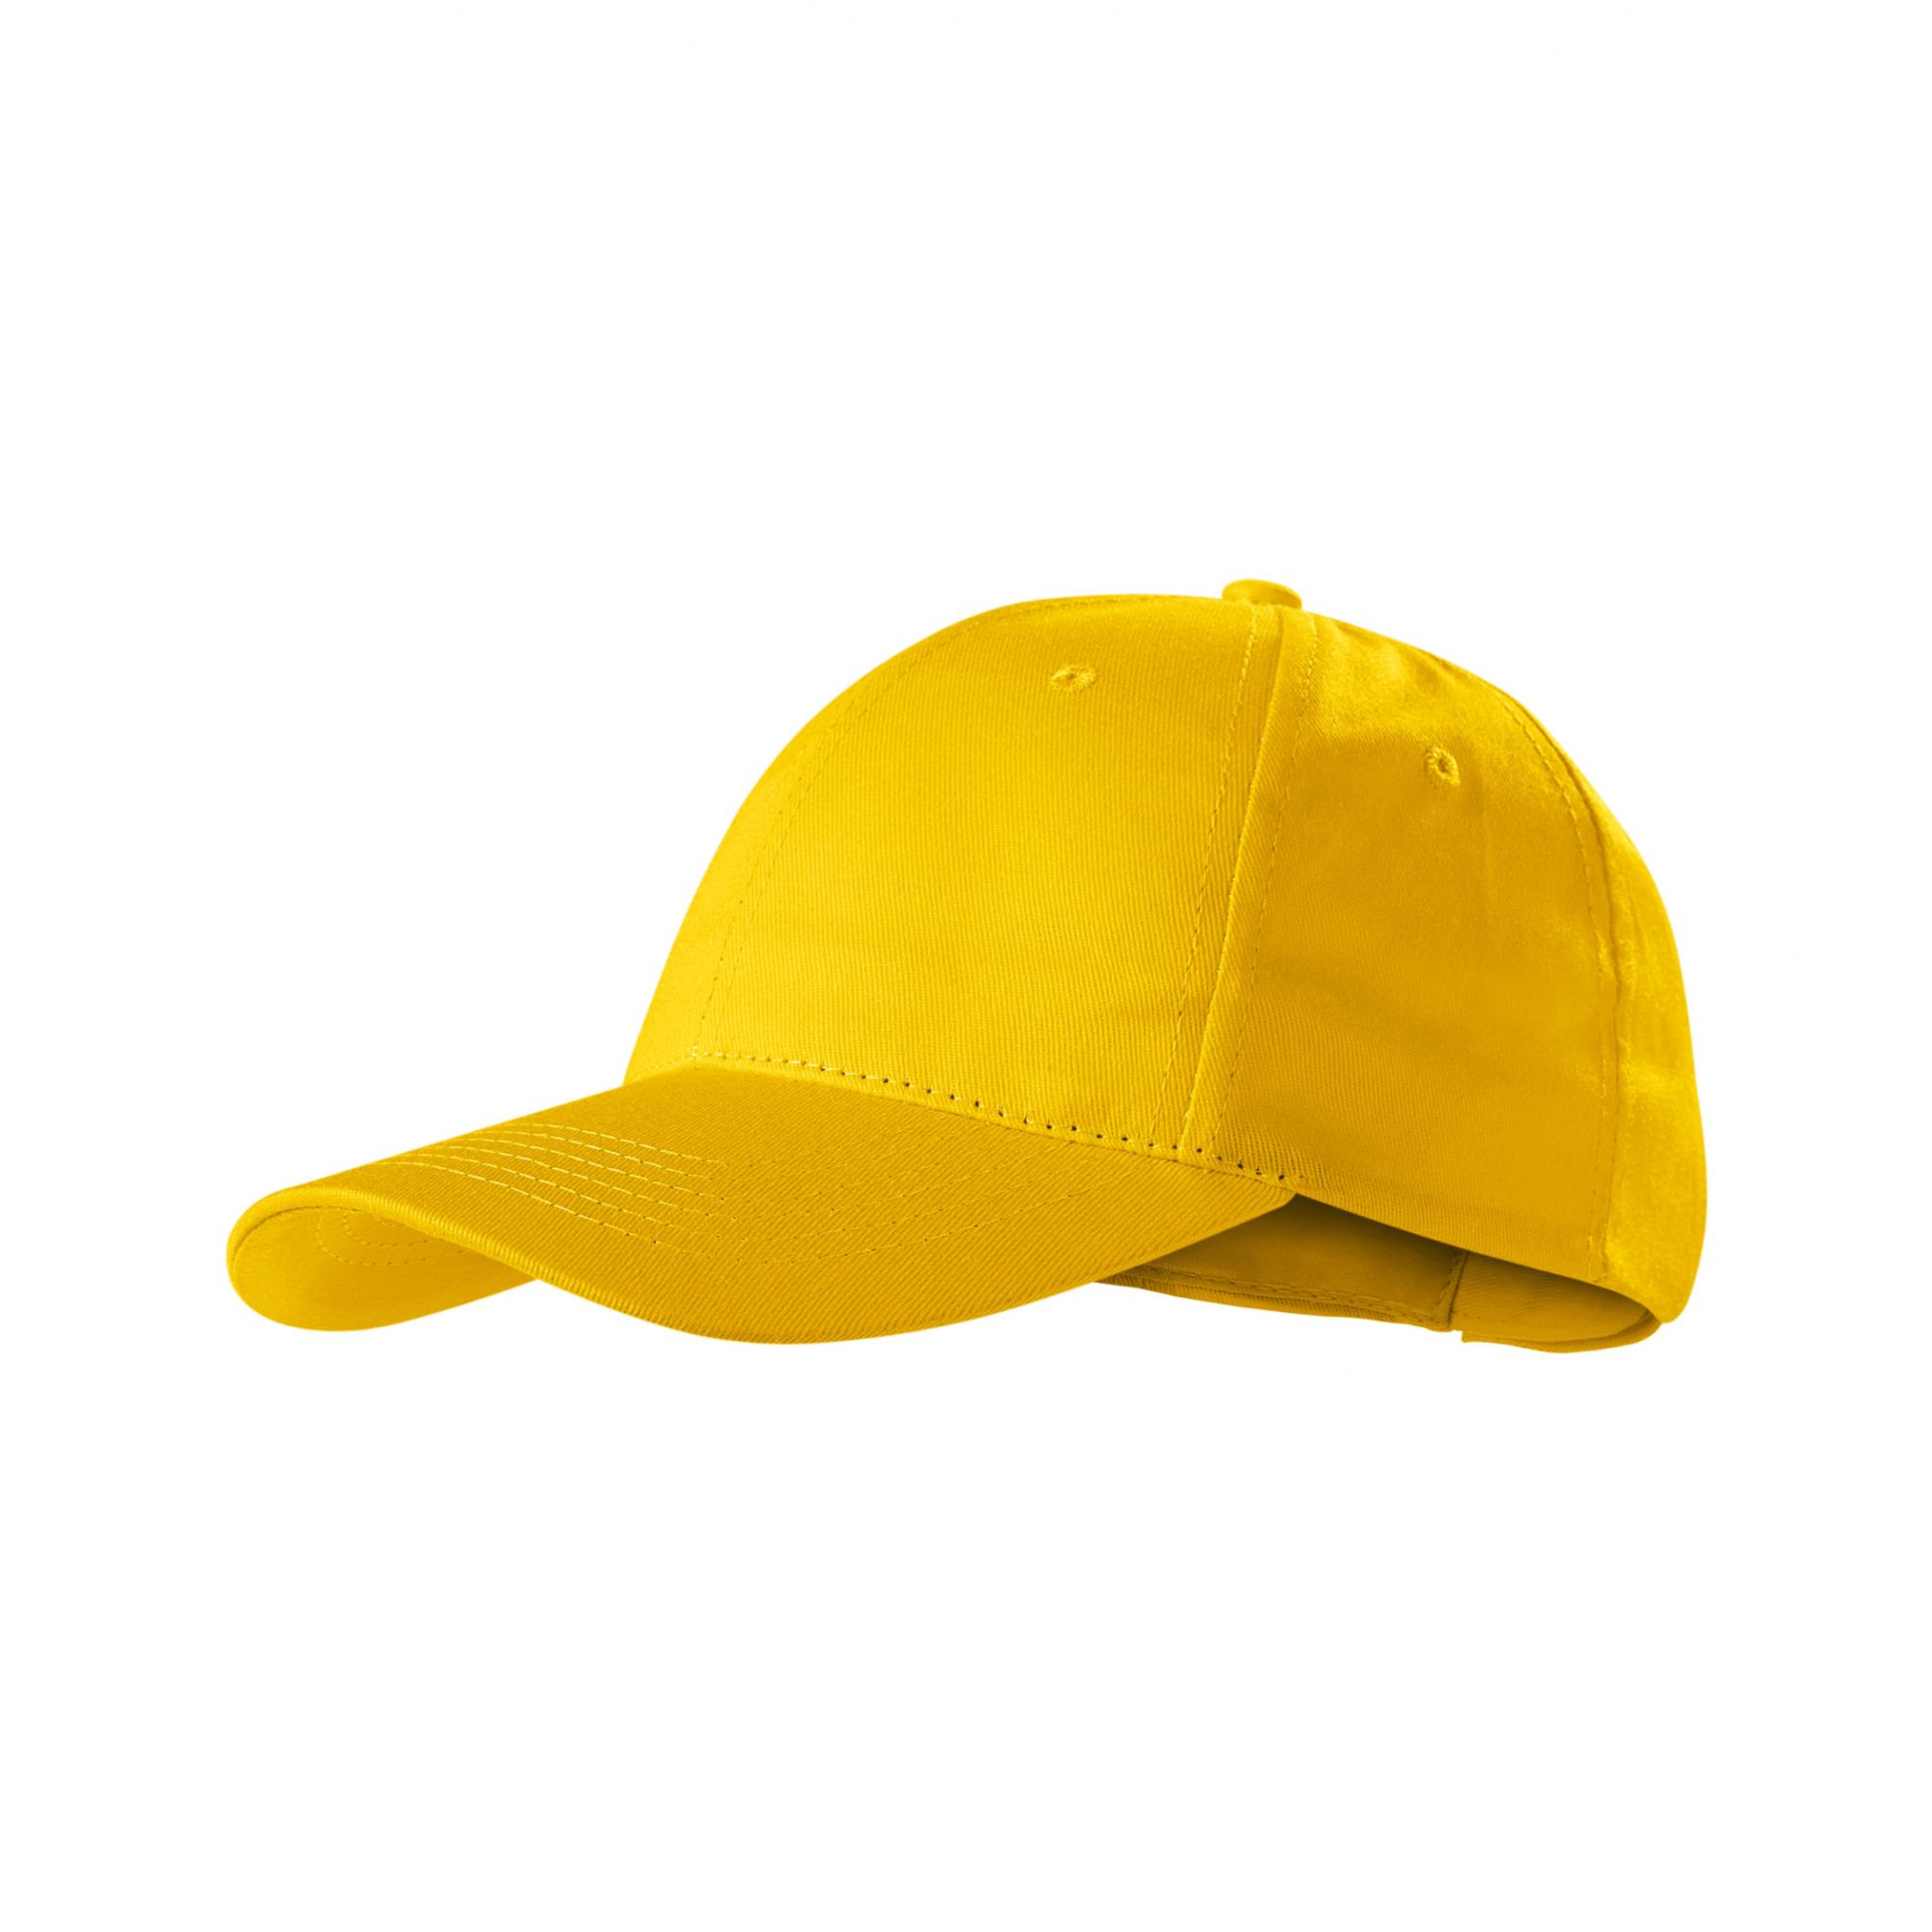 Şapcă unisex Sunshine P31 Galben Marime universala